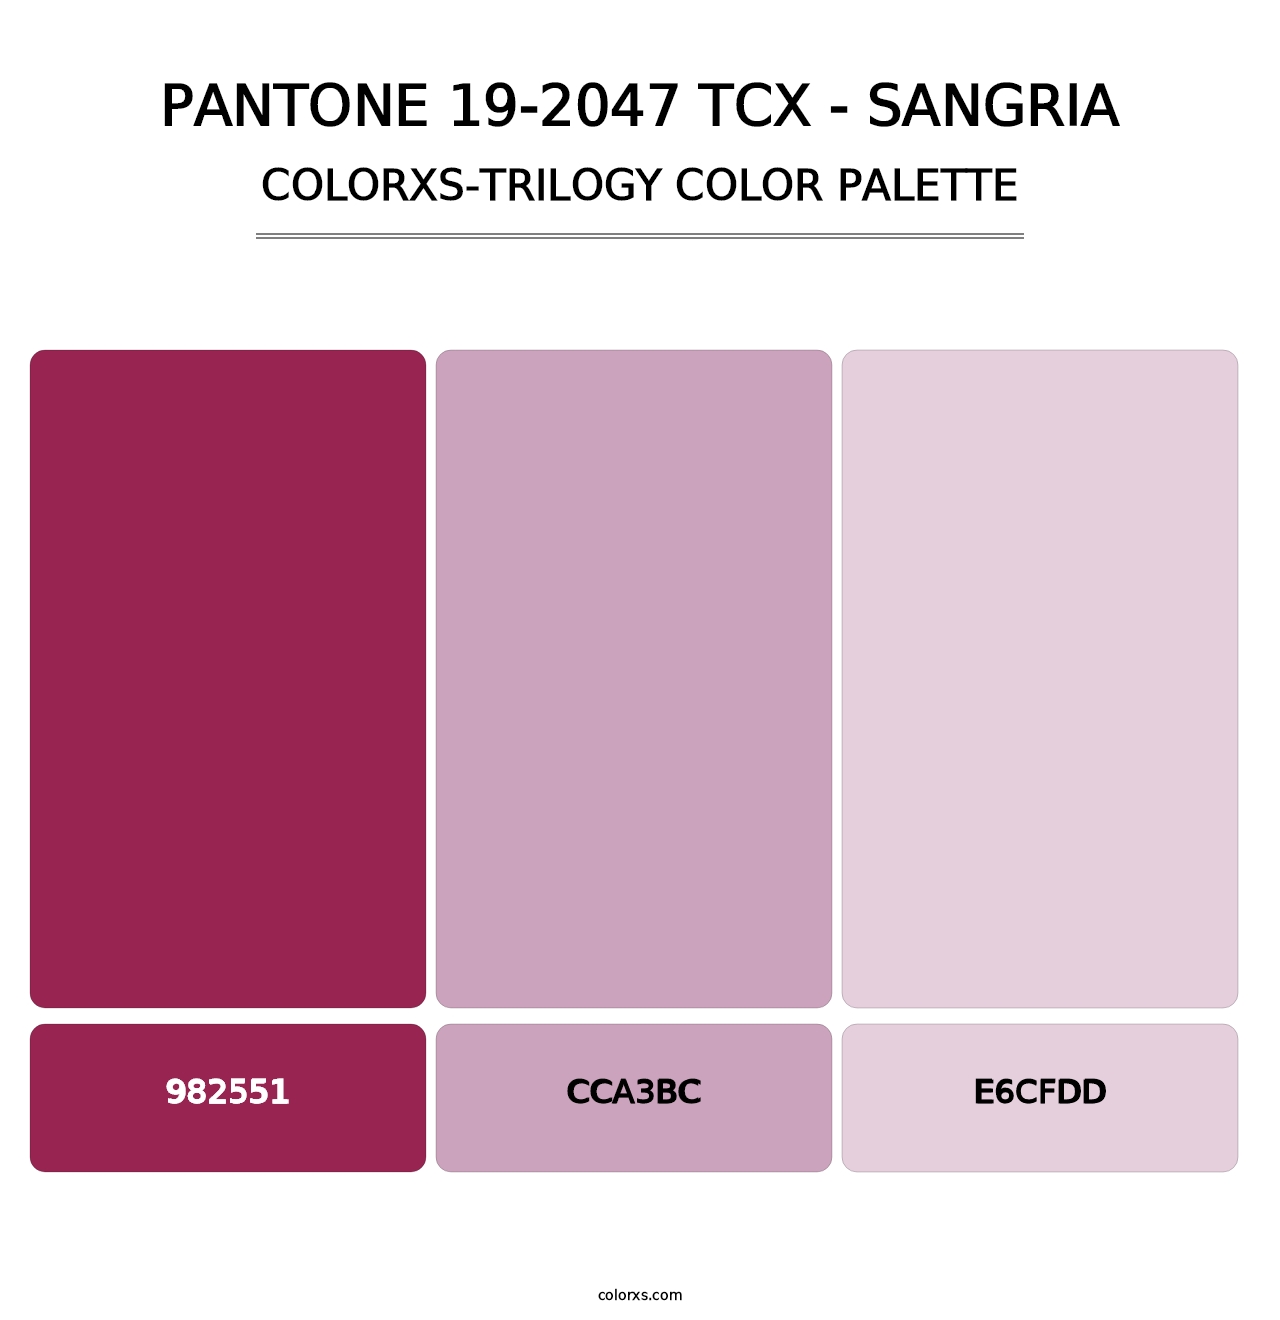 PANTONE 19-2047 TCX - Sangria - Colorxs Trilogy Palette